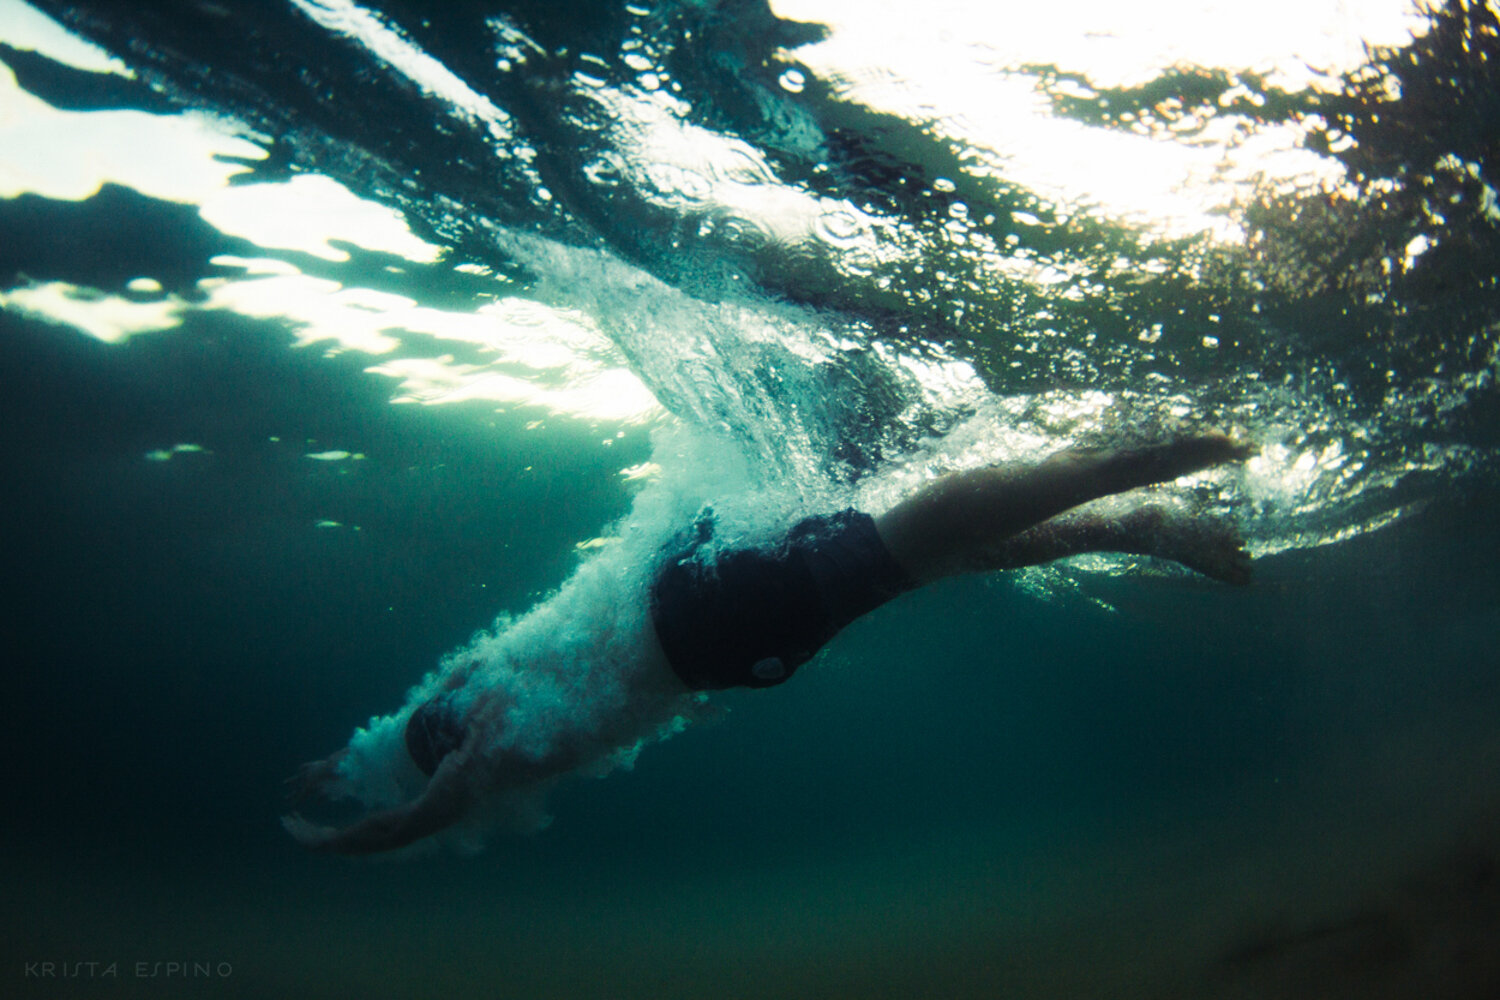 bodysurf waves lifestyle nature photography photographer krista espino travel underwater swim ocean laguna beach_-6.jpg